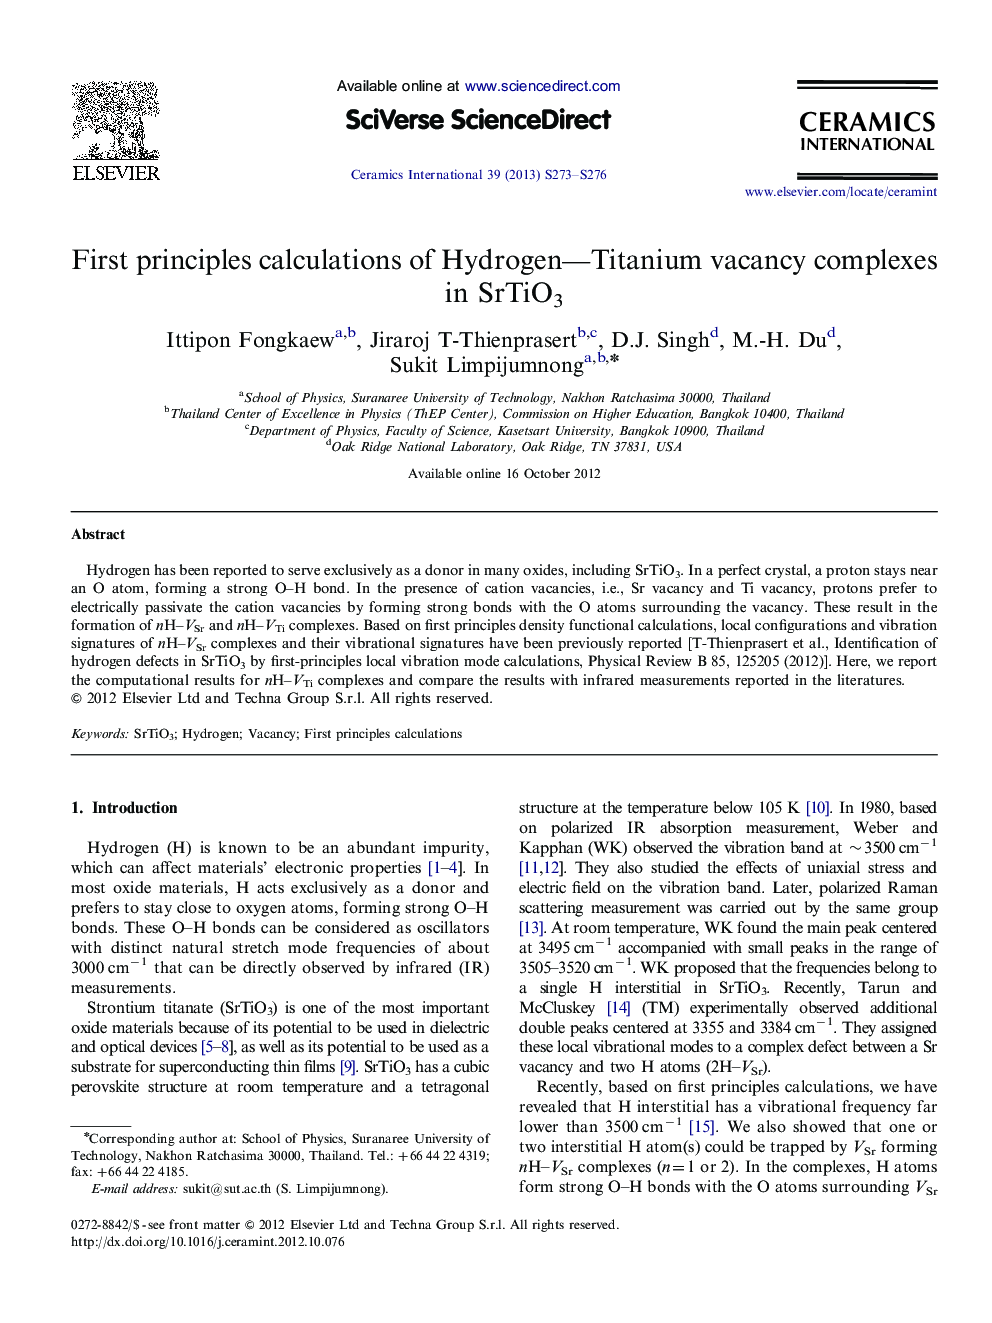 First principles calculations of Hydrogen—Titanium vacancy complexes in SrTiO3